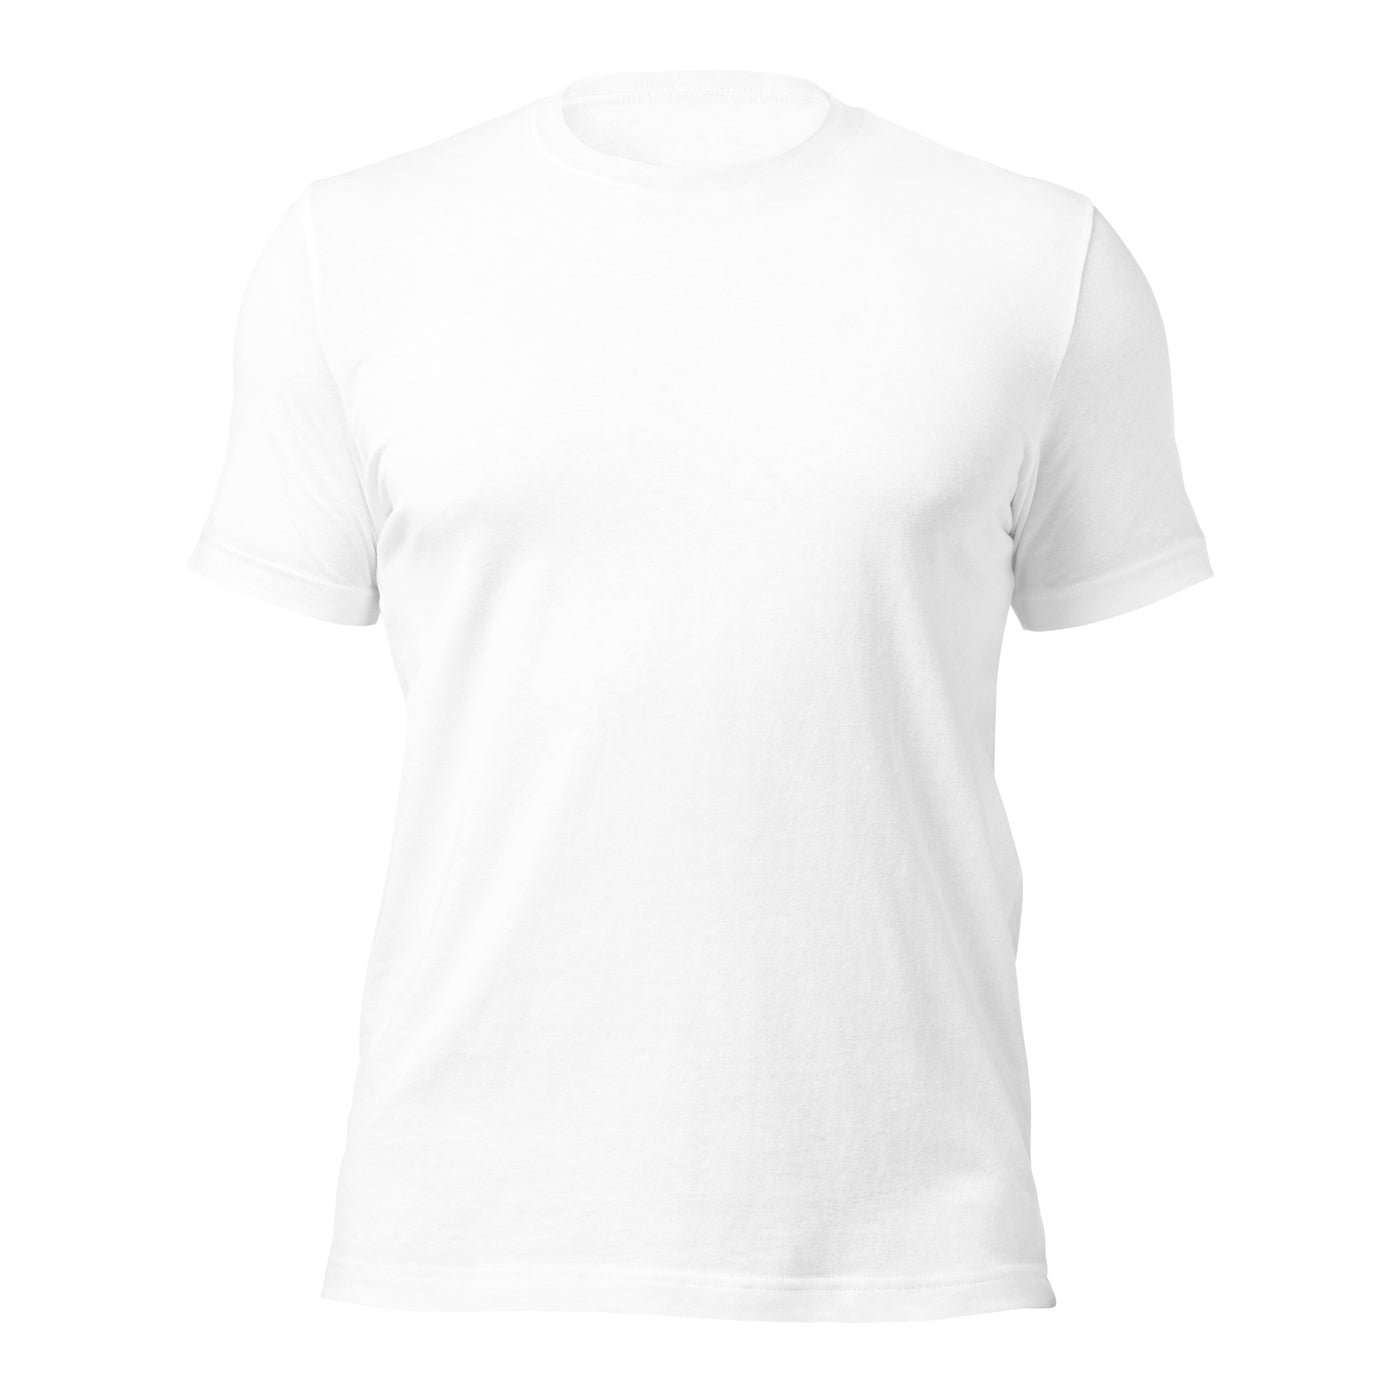 I'm her support - Unisex t-shirt (back print)